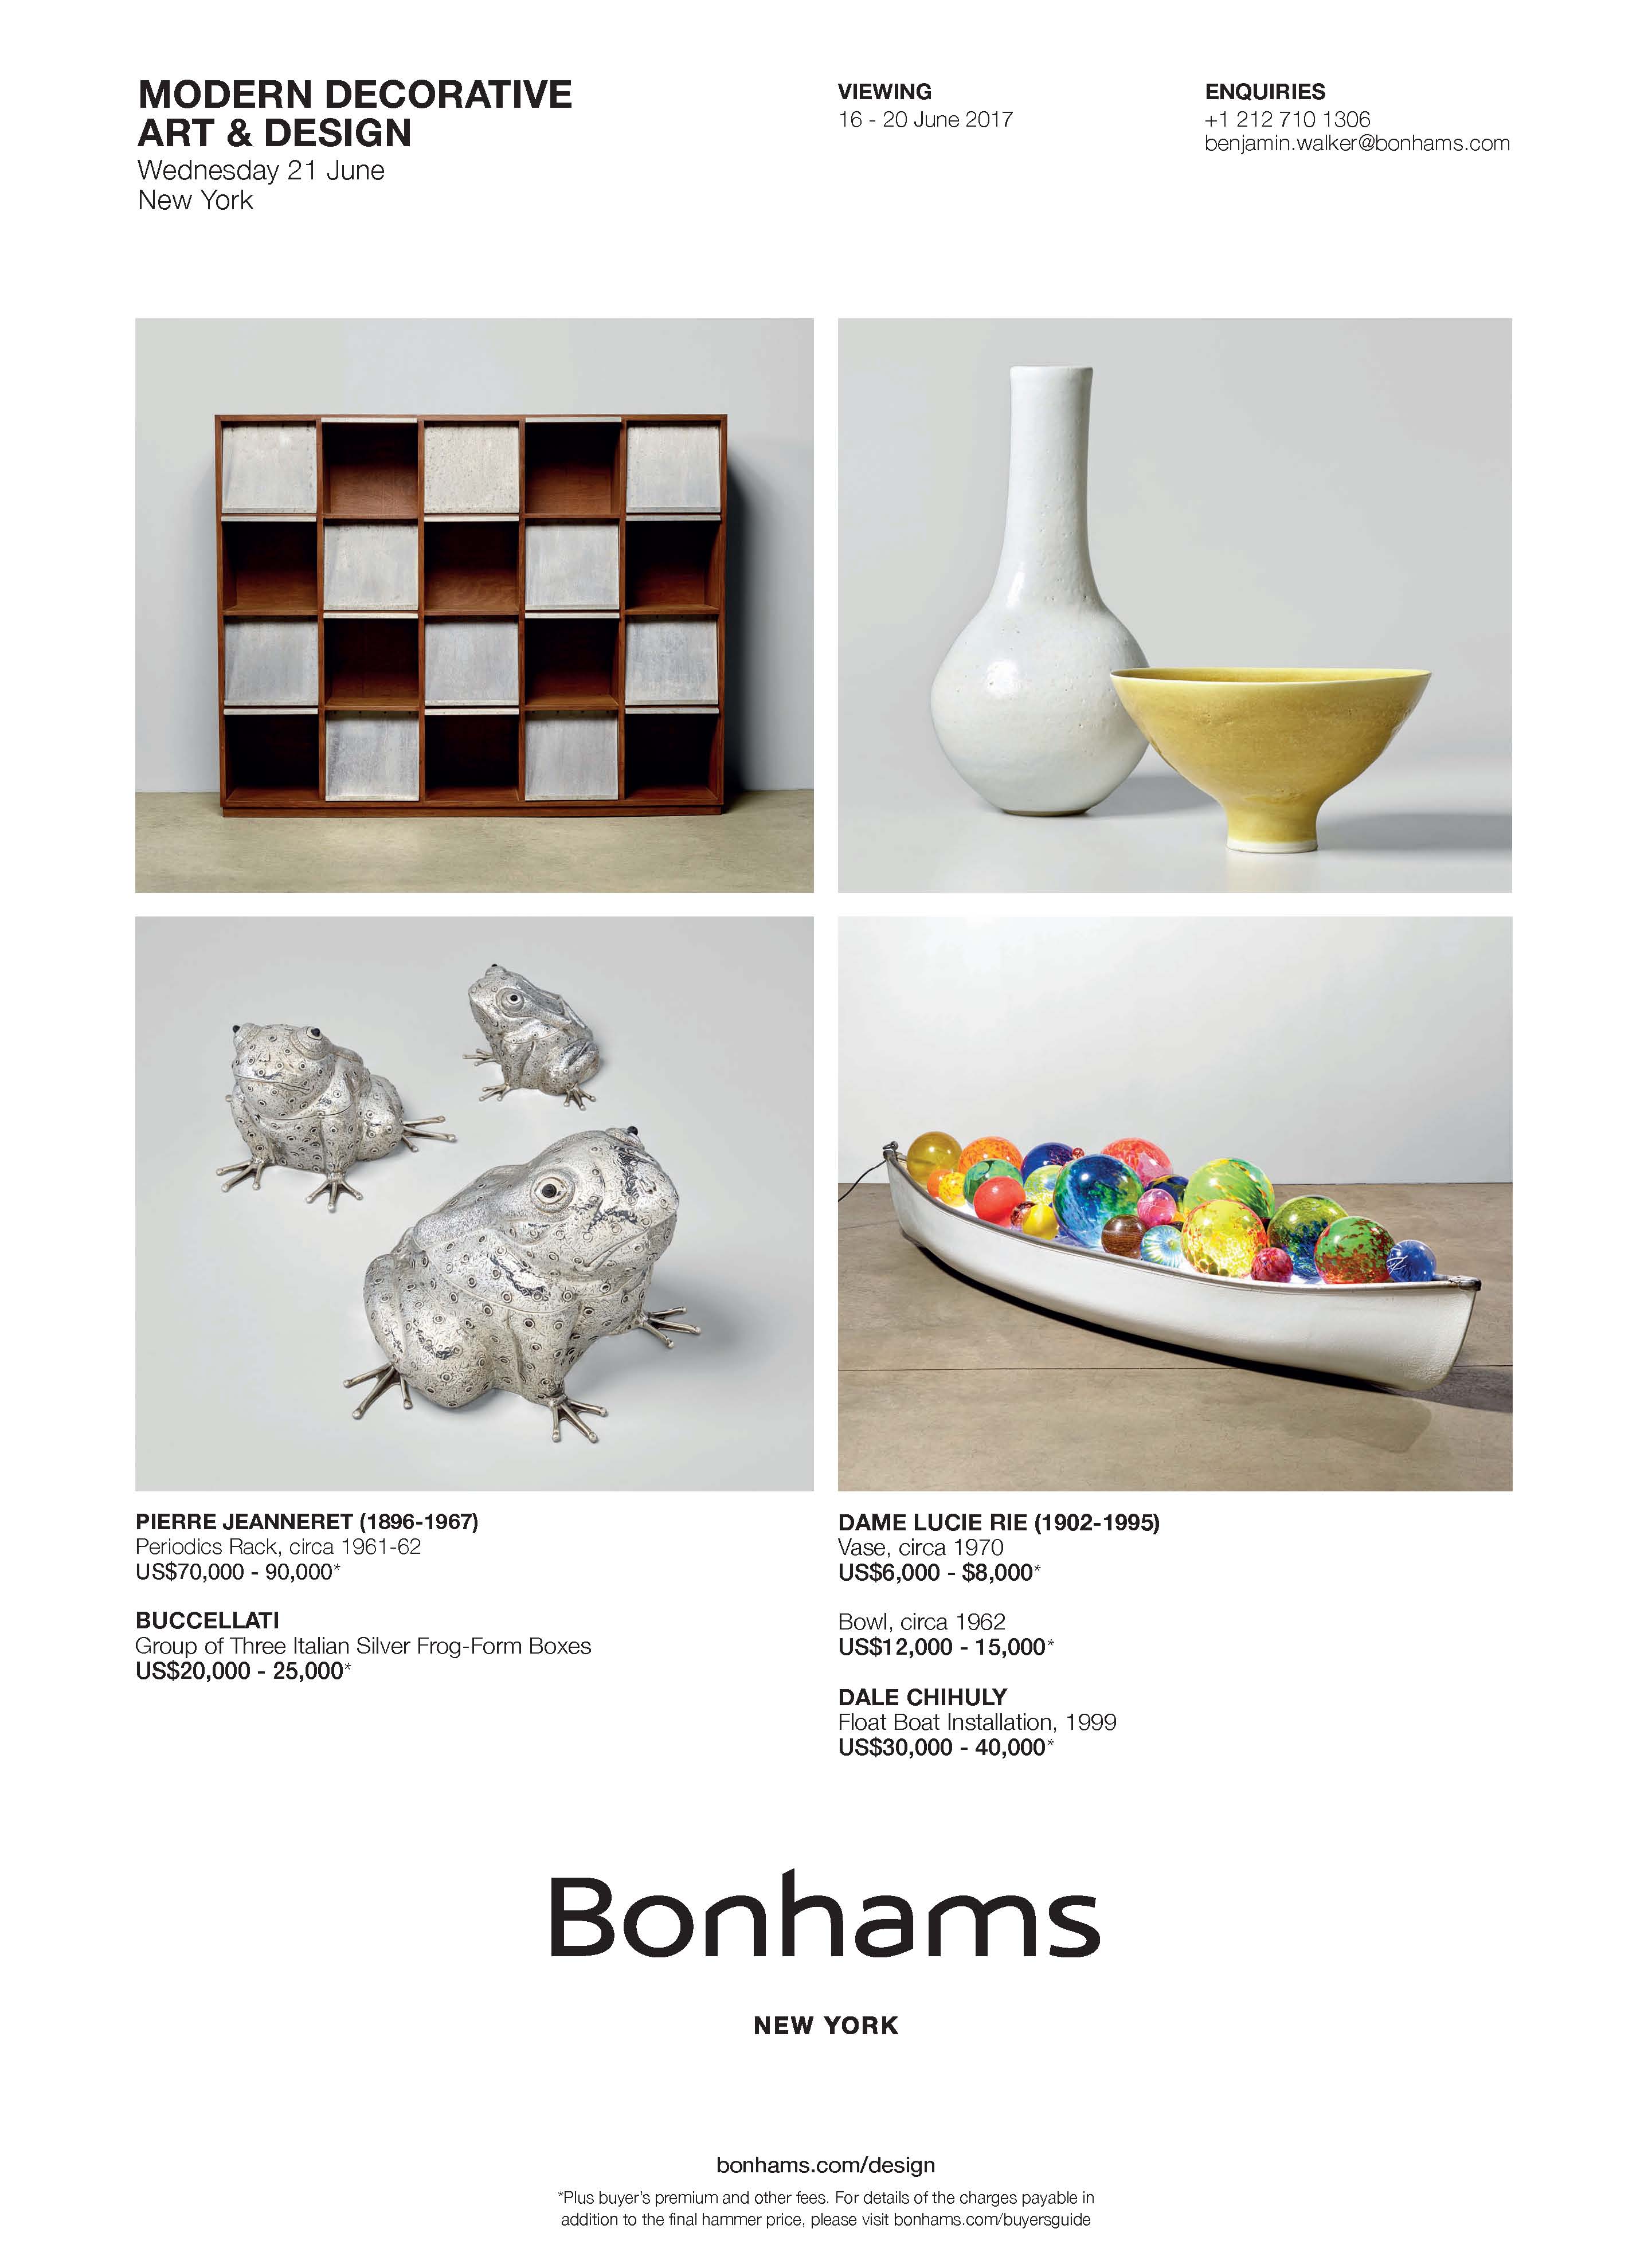 Bonhams - Modern Decorative Art & Design.jpg